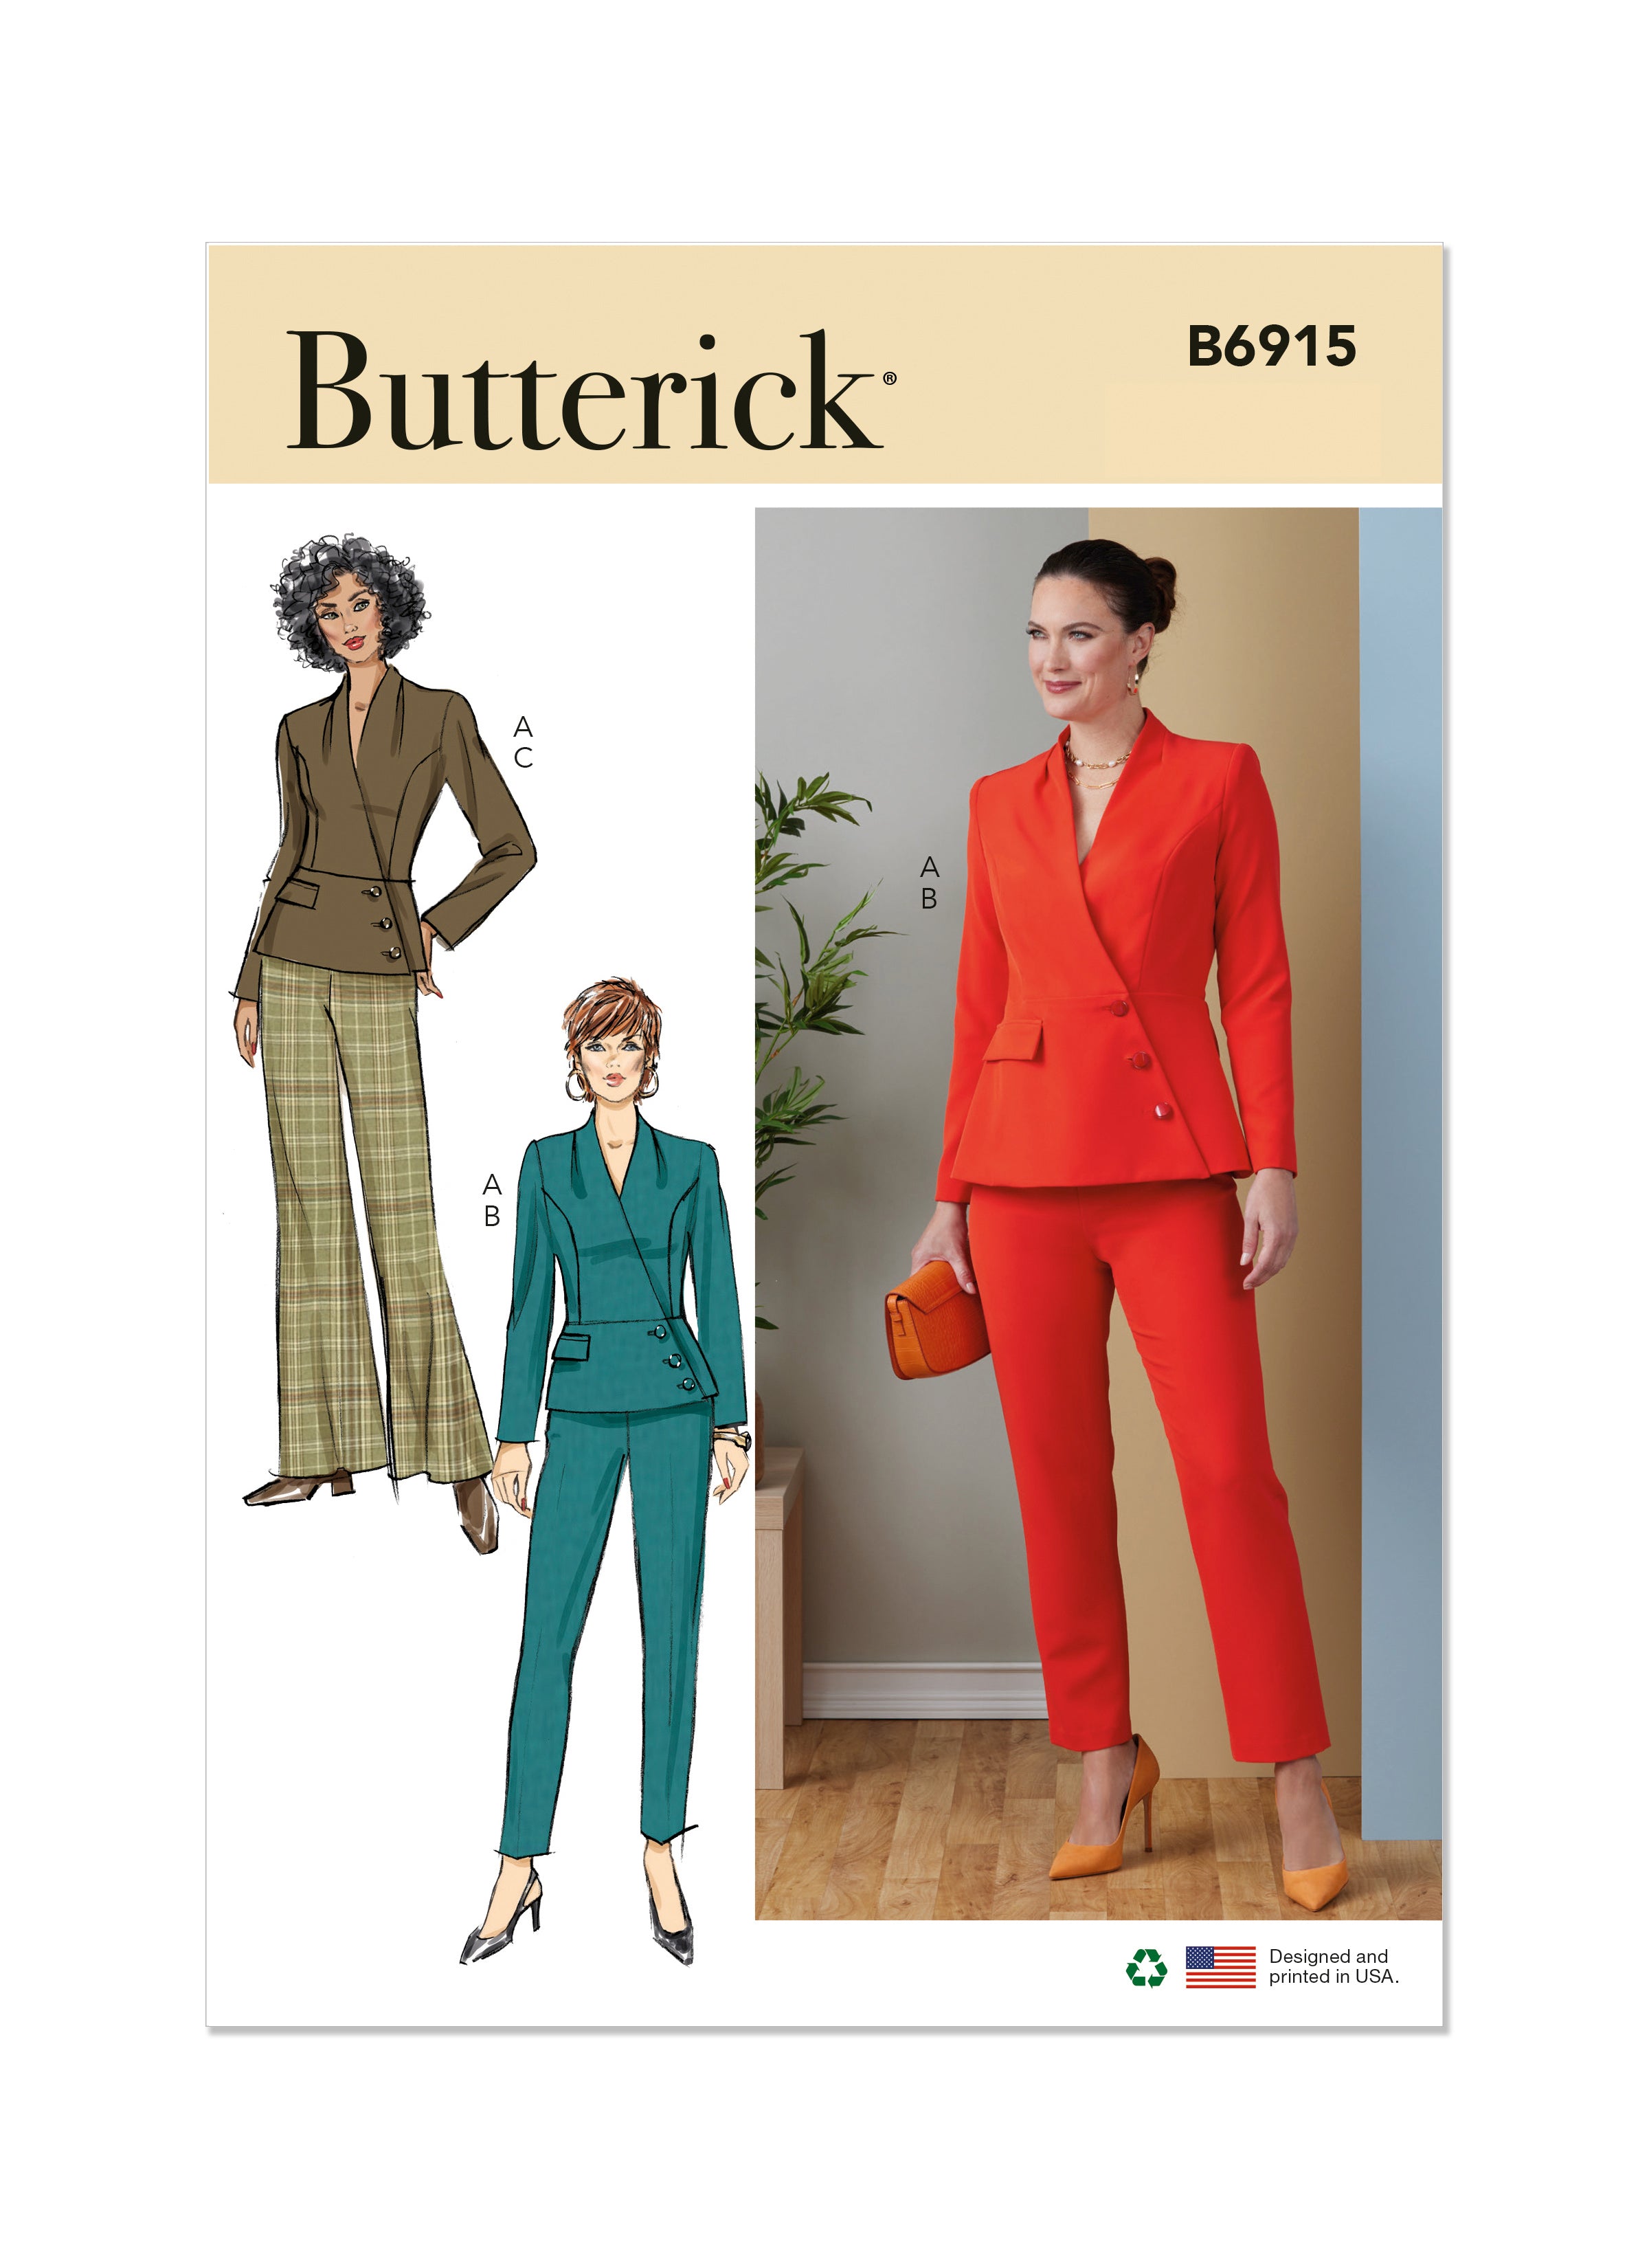 Butterick Sewing Pattern B6882 - Misses' Jacket, Dress, Top, Pants